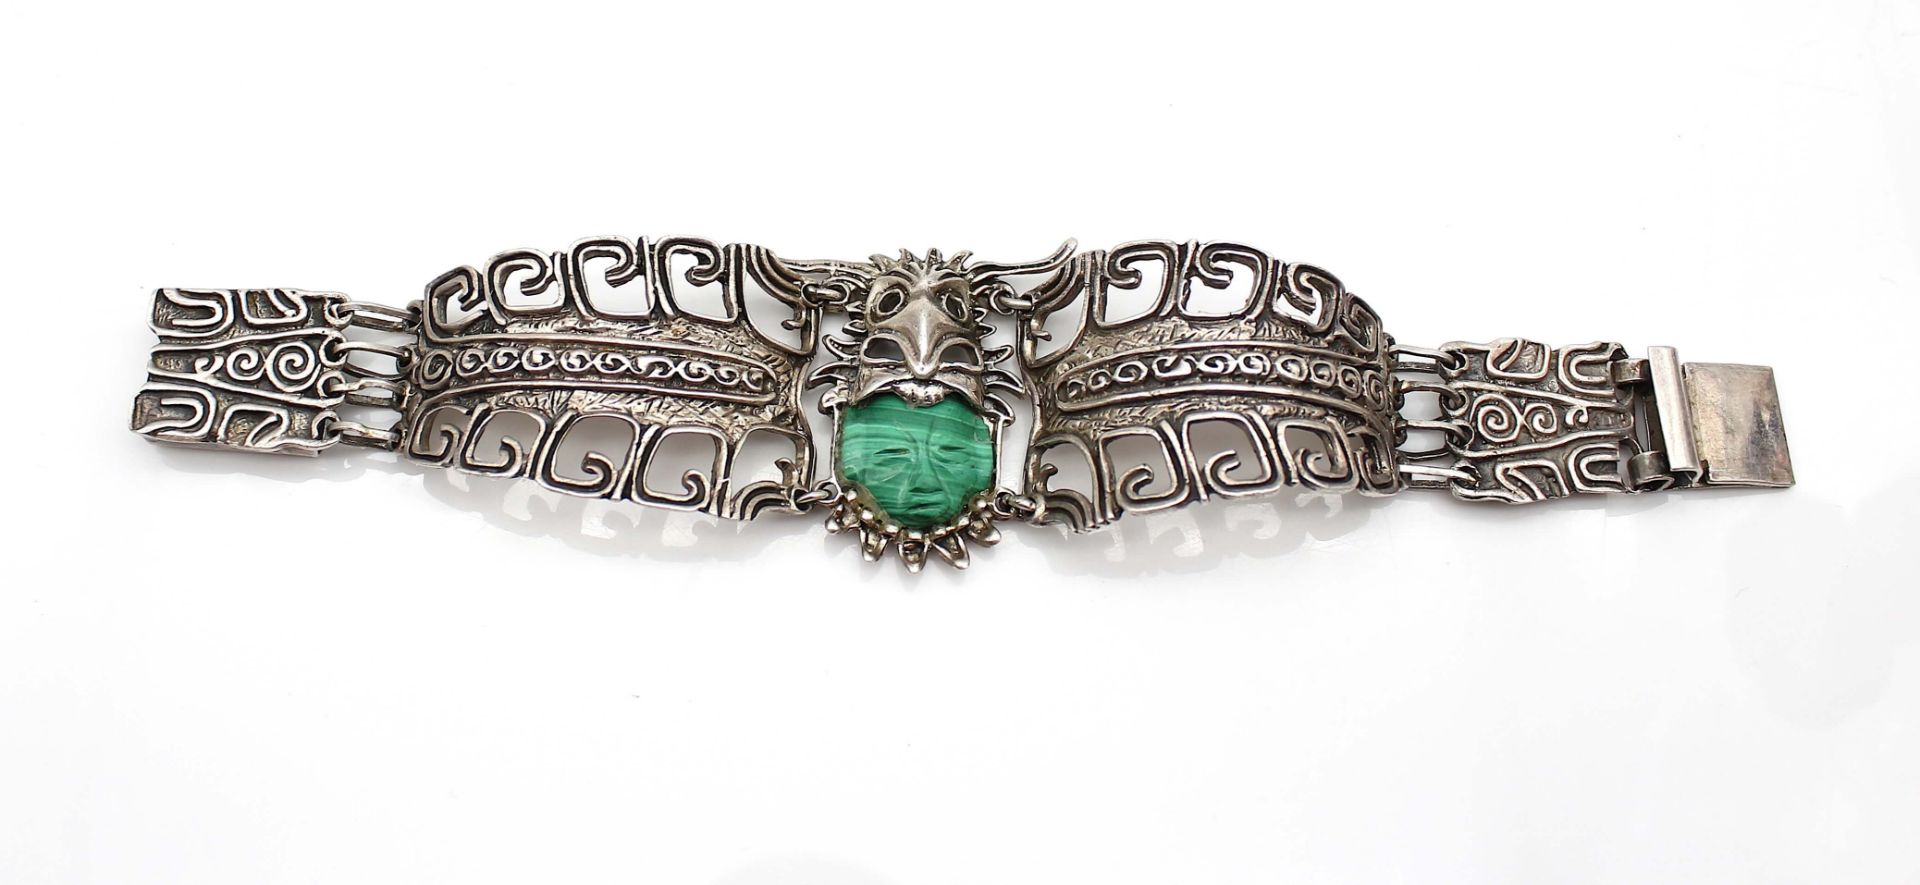 Silver bracelet with a malachite - Image 2 of 3